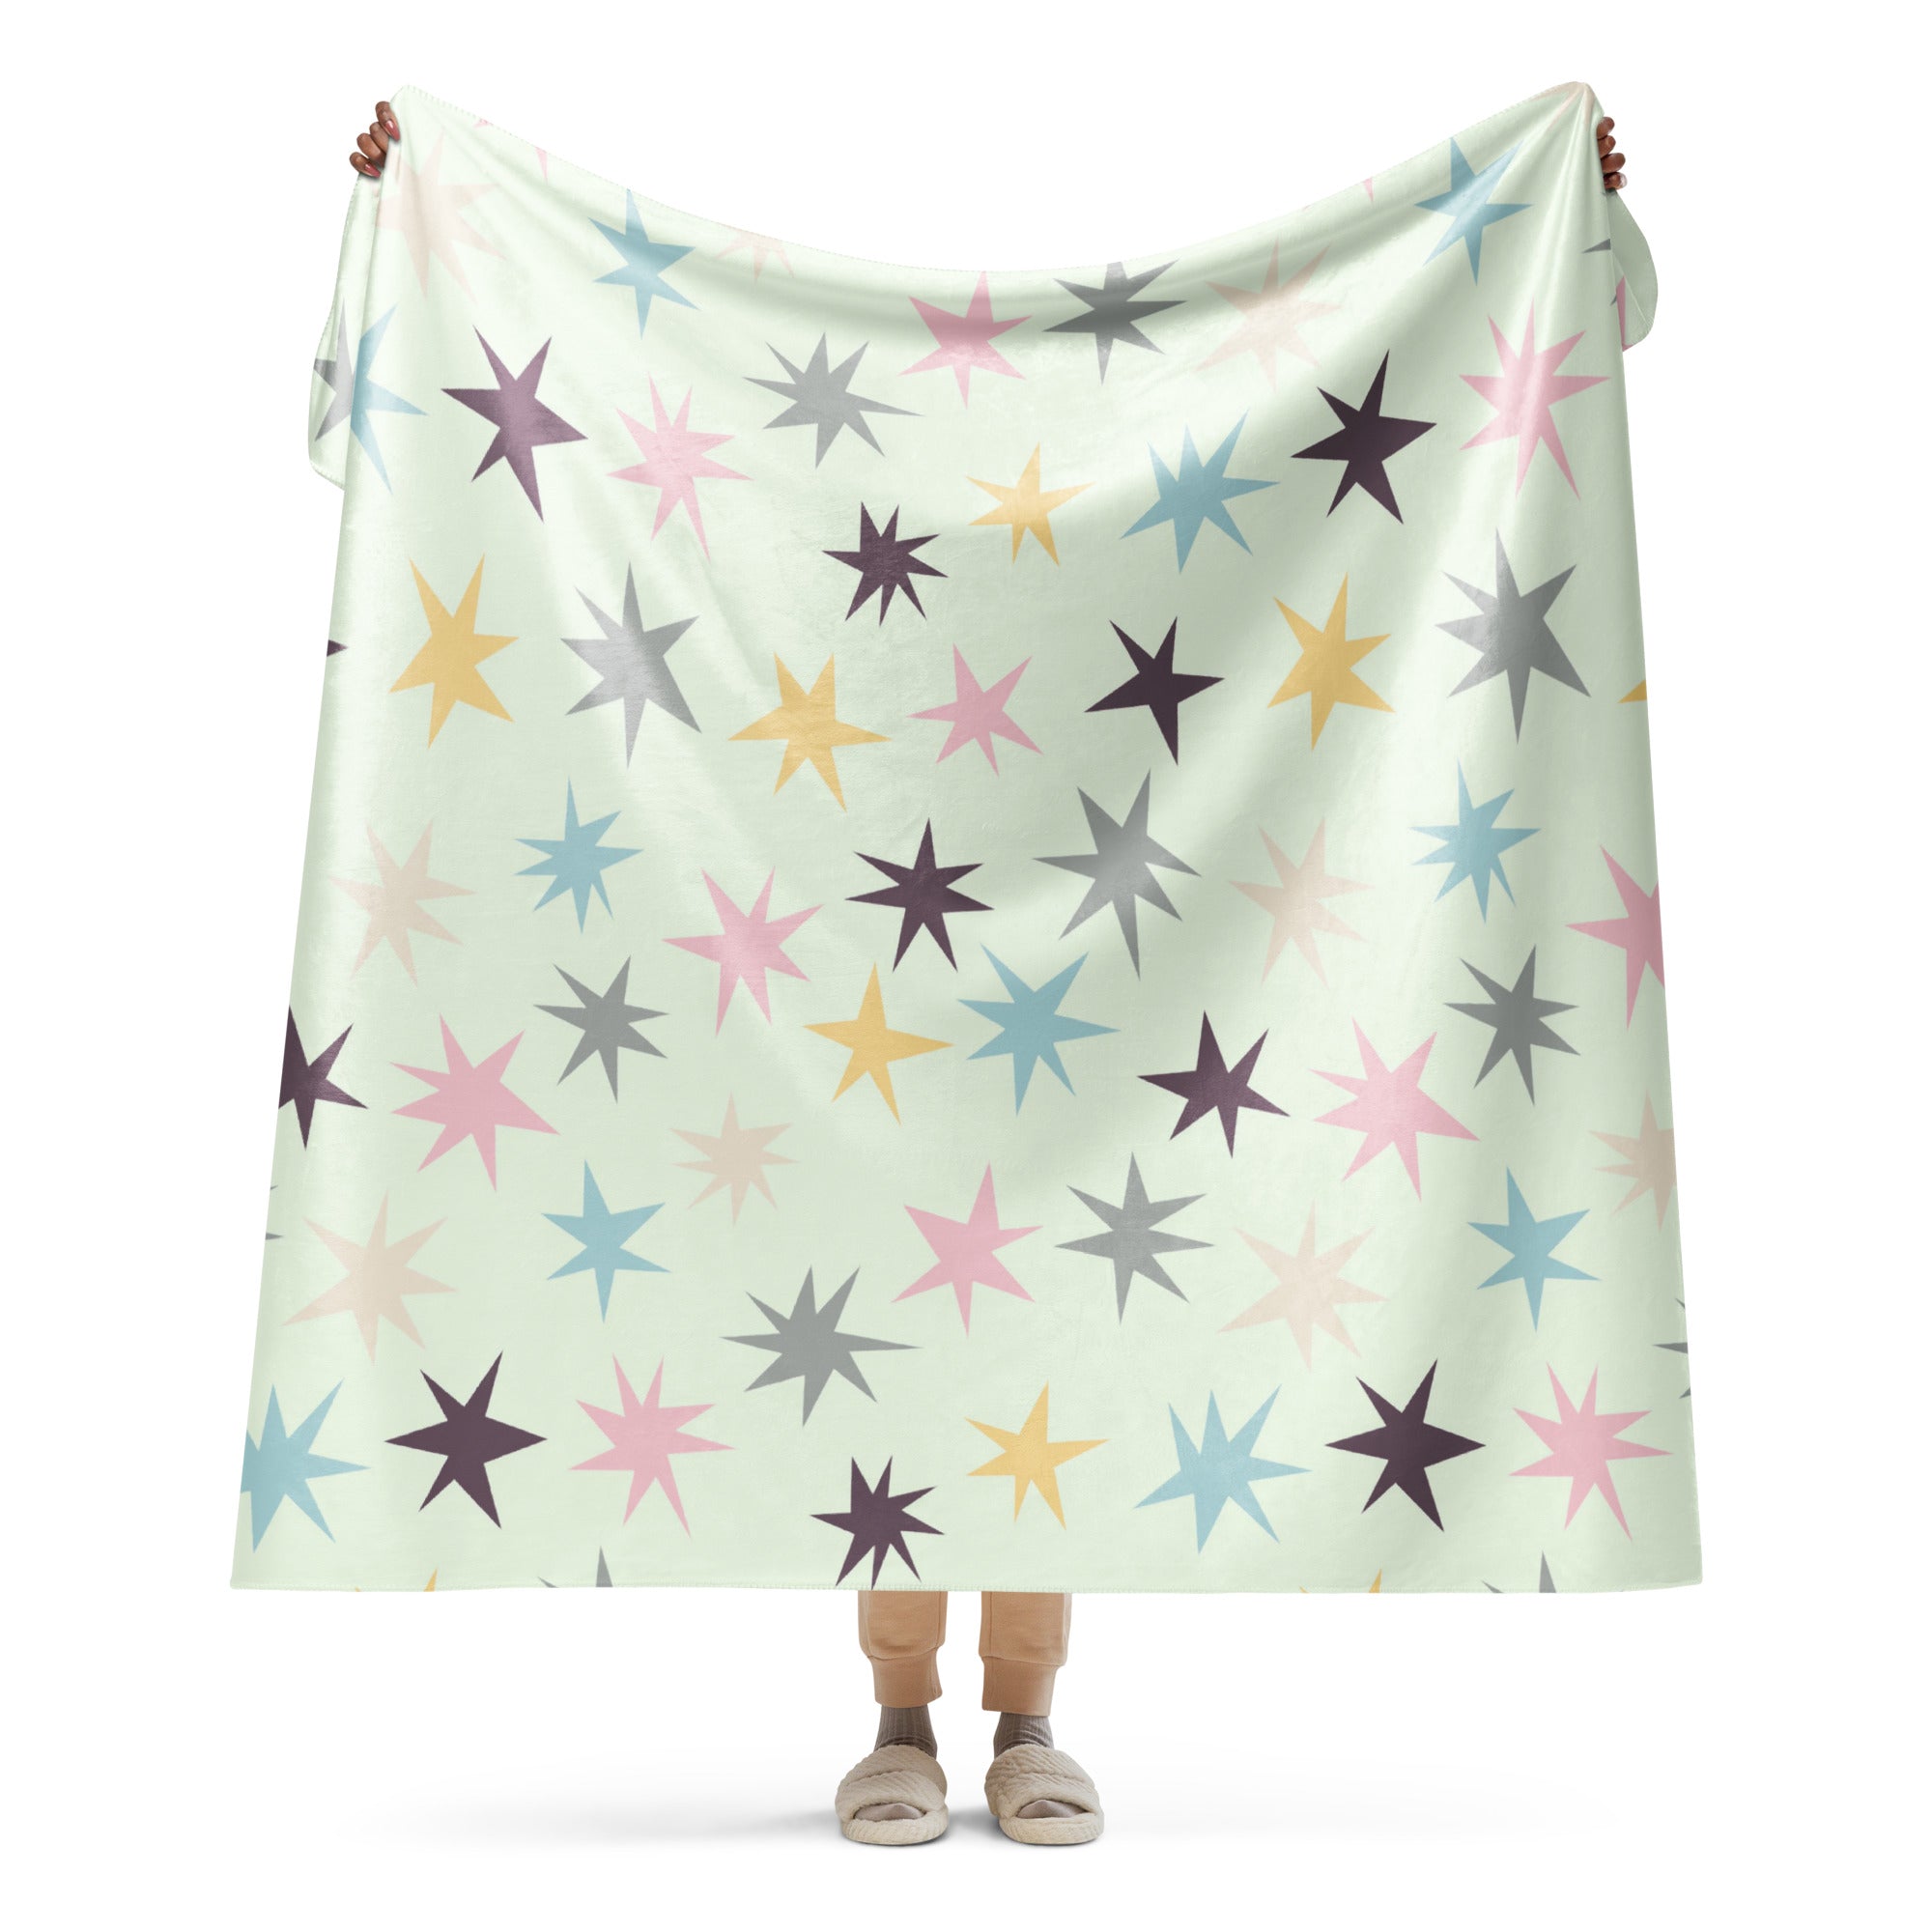 Colorful Stars Sherpa blanket